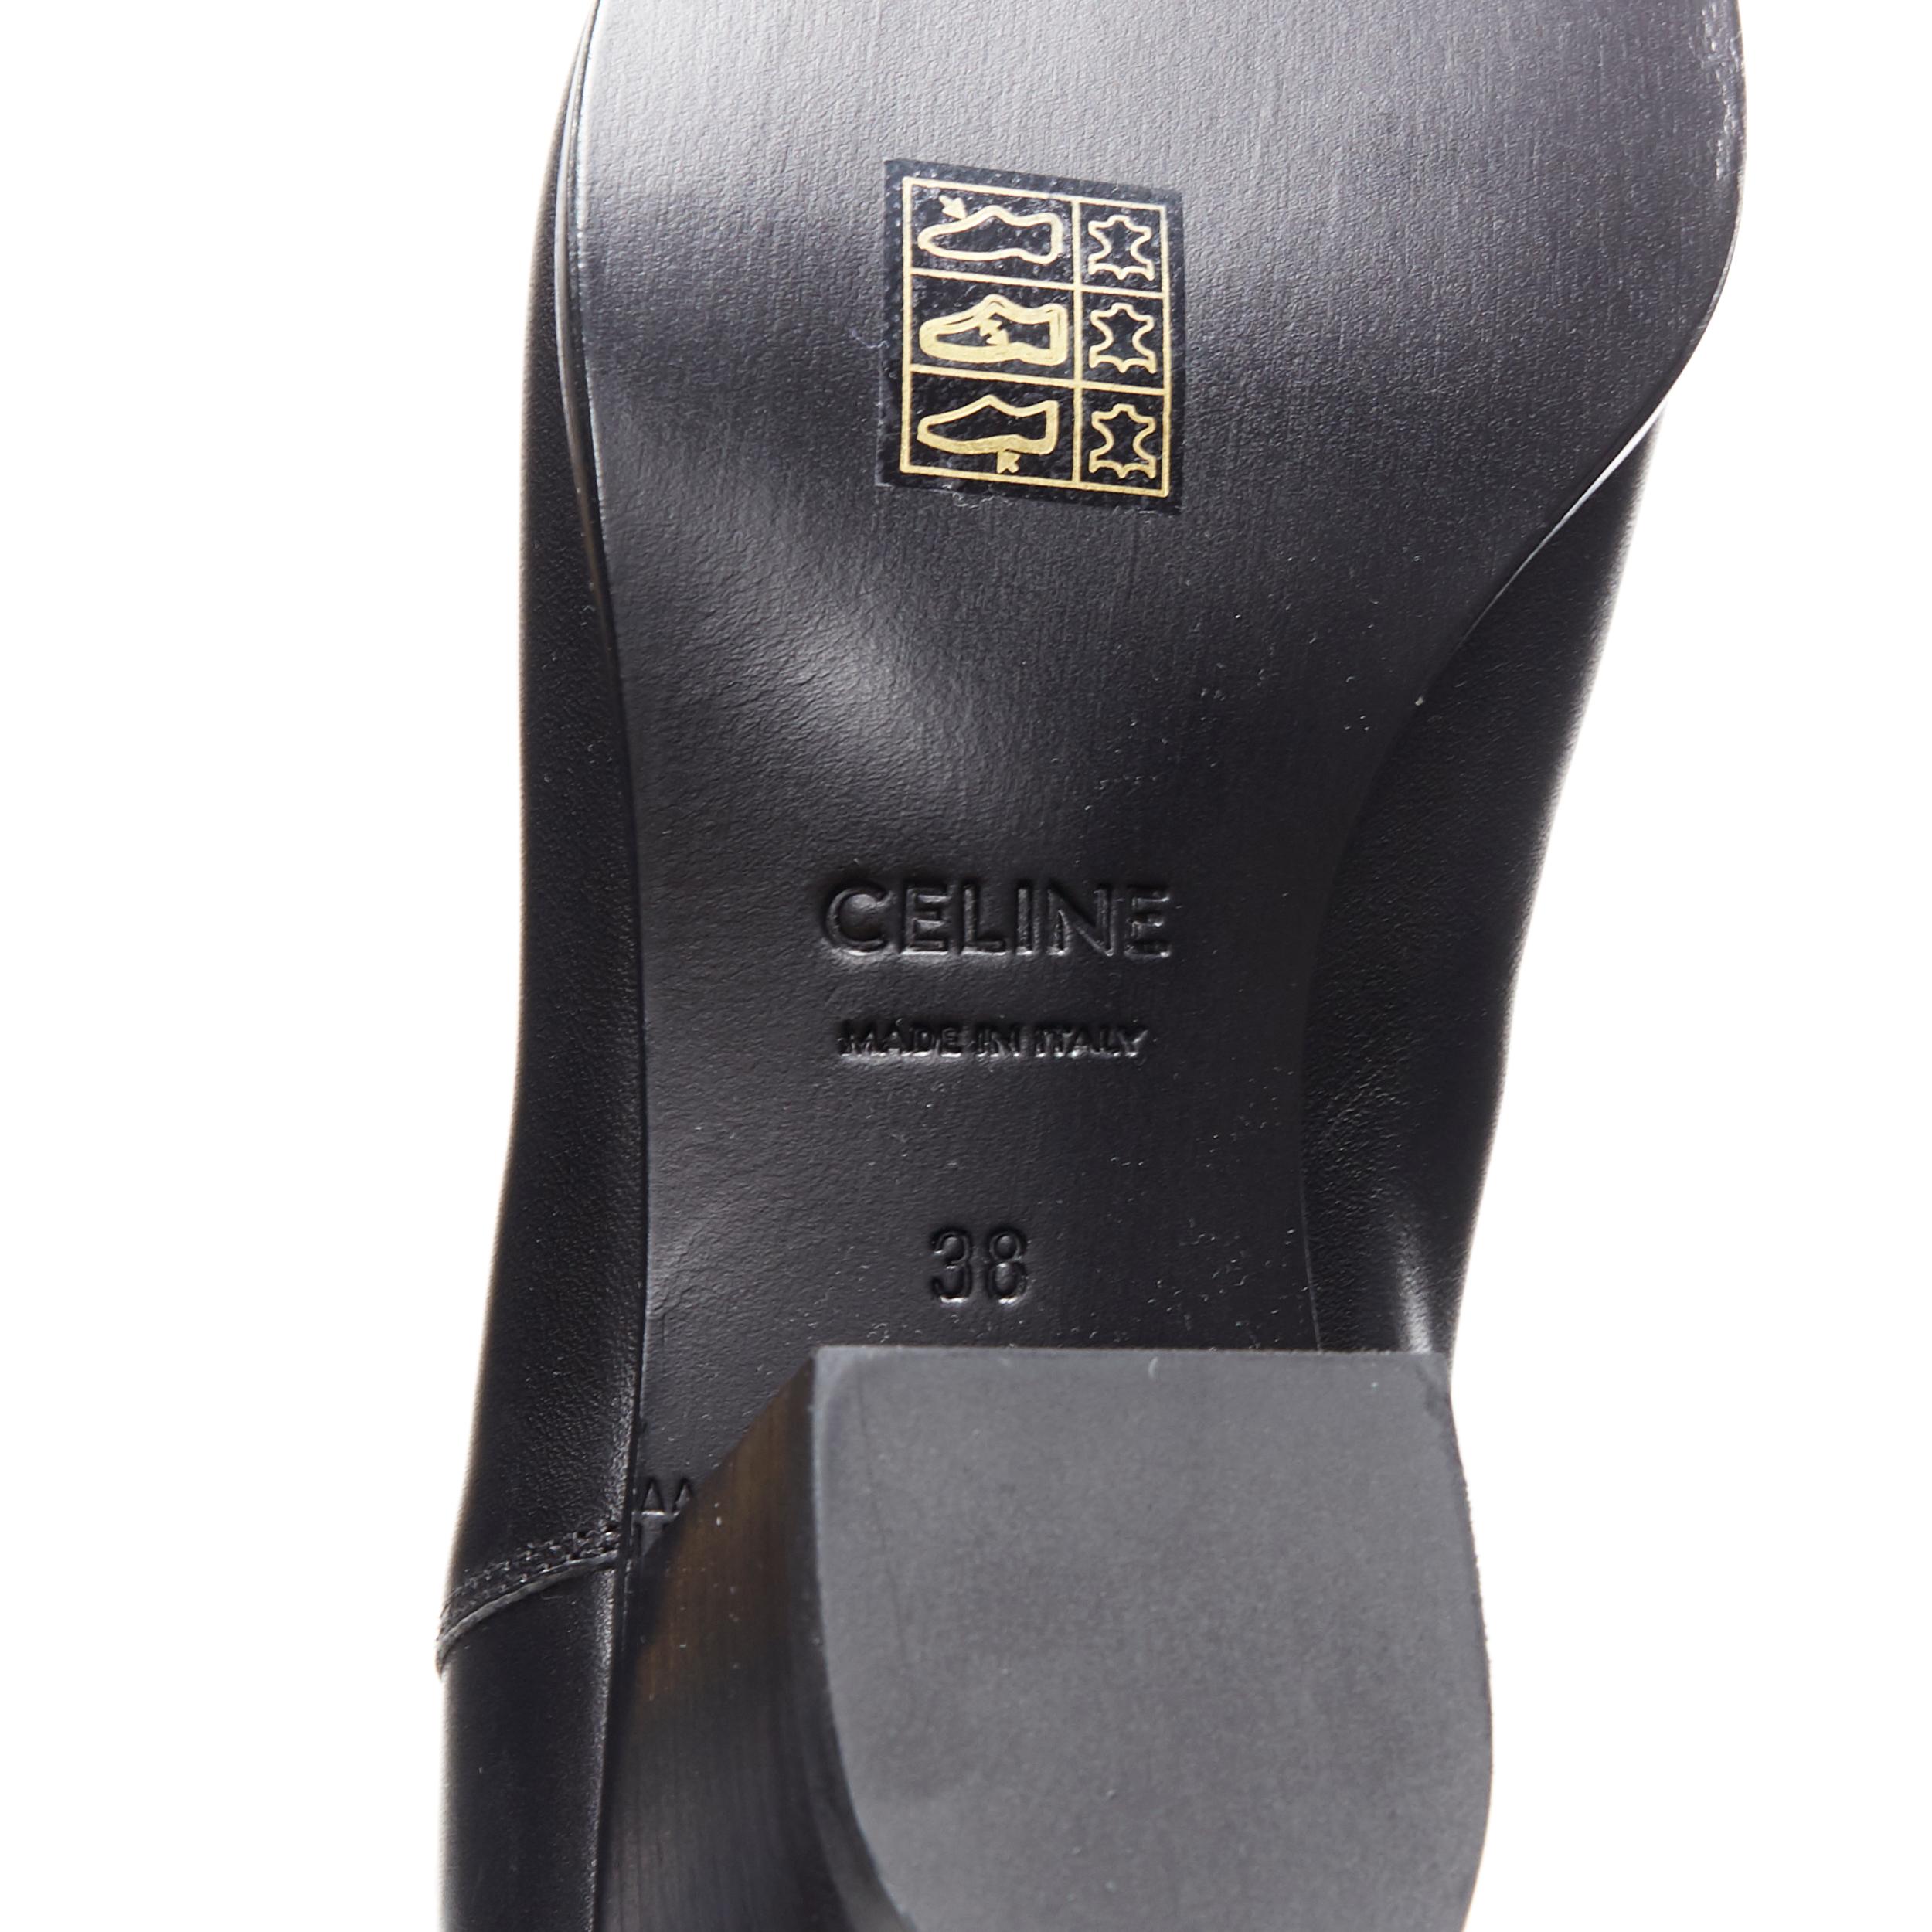 new CELINE HEDI SLIMANE black leather almond toe cuban heel ankle boot EU38 4